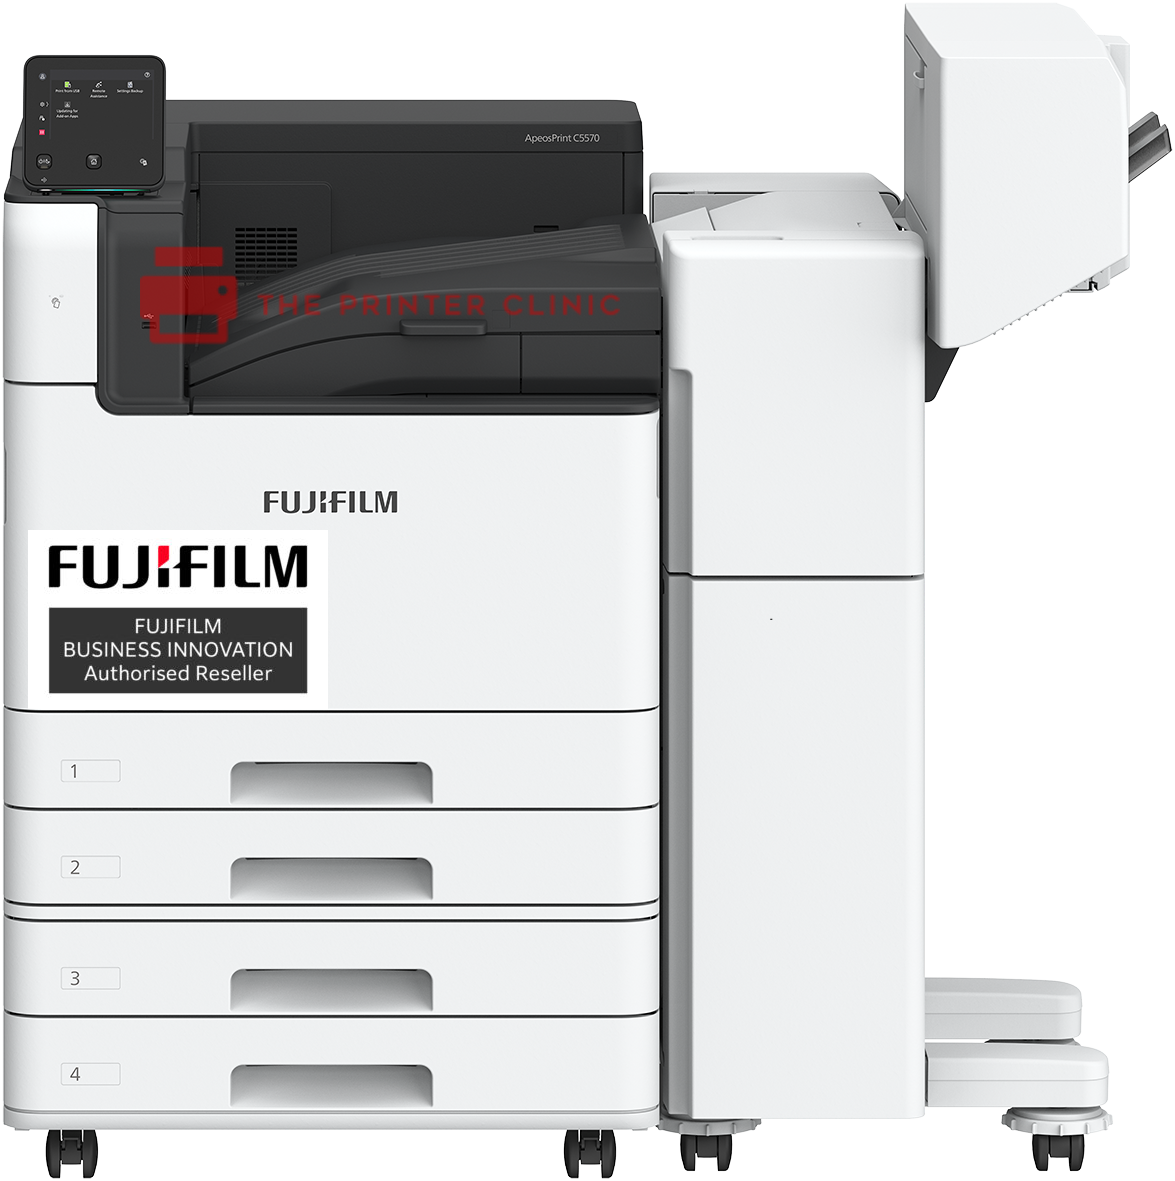 FUJIFILM ApeosPrint C5570 A3 Colour Laser Printer